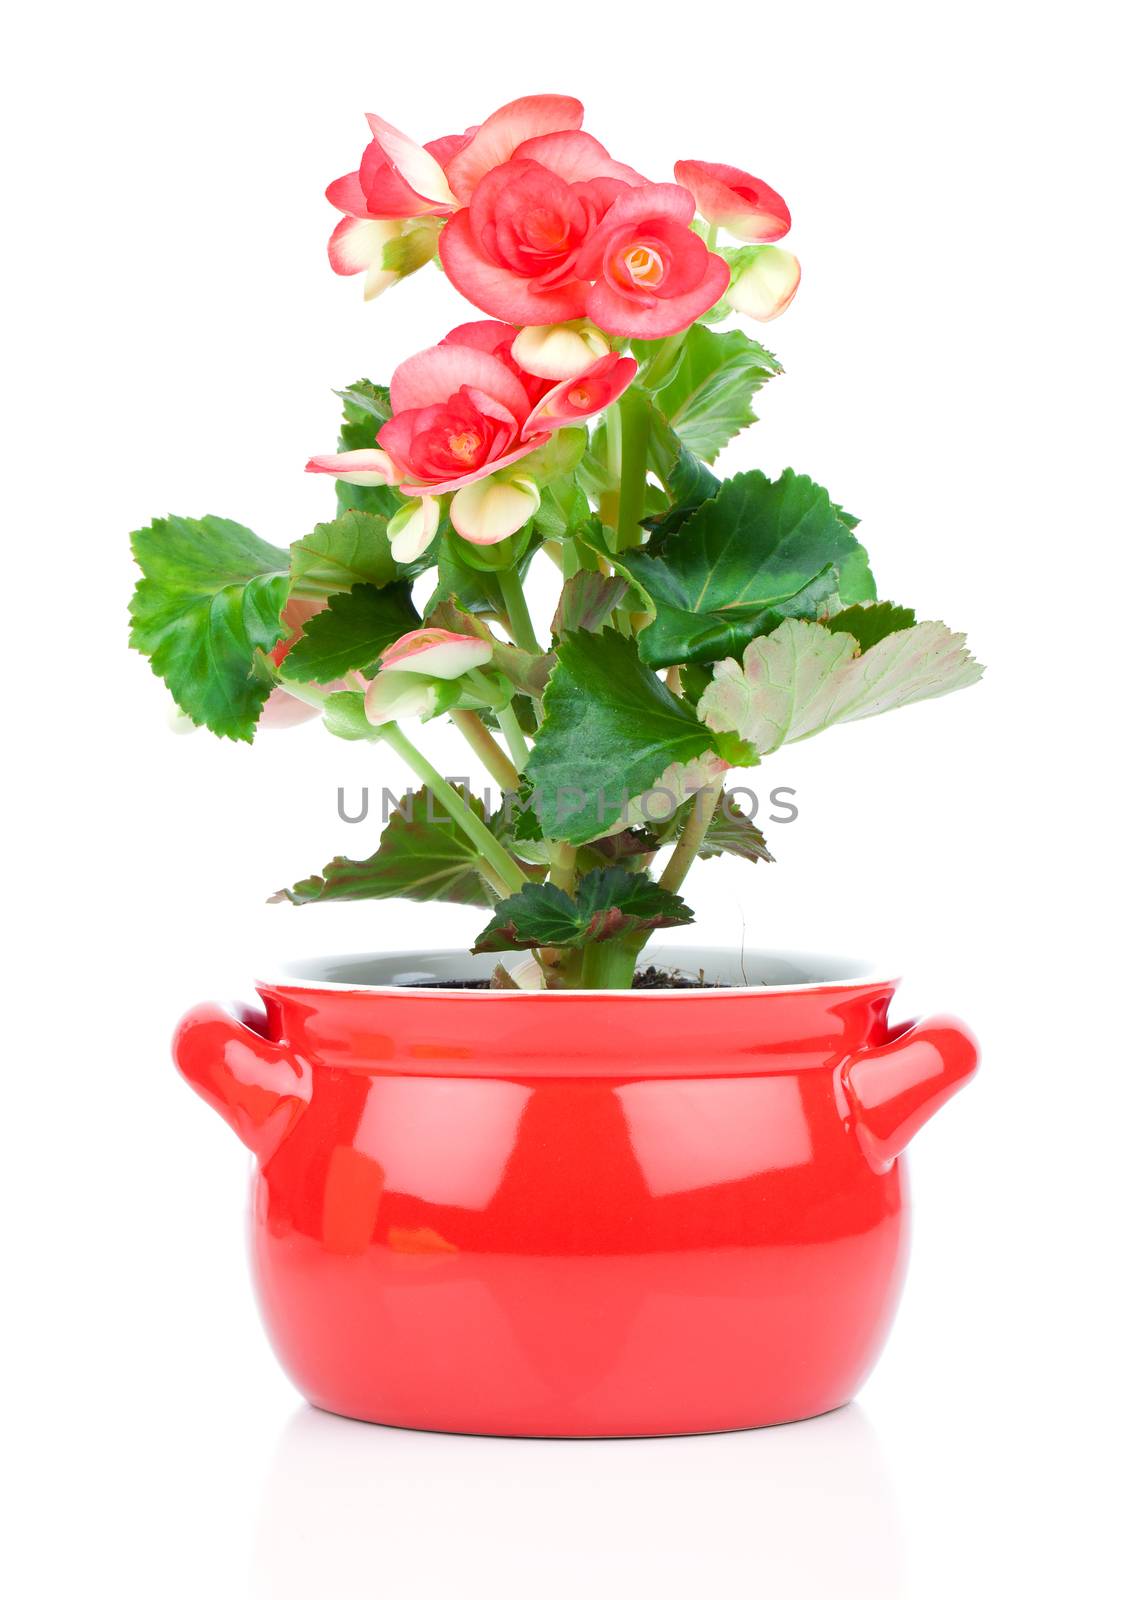 Flower blooming in a pot, red begonia by motorolka